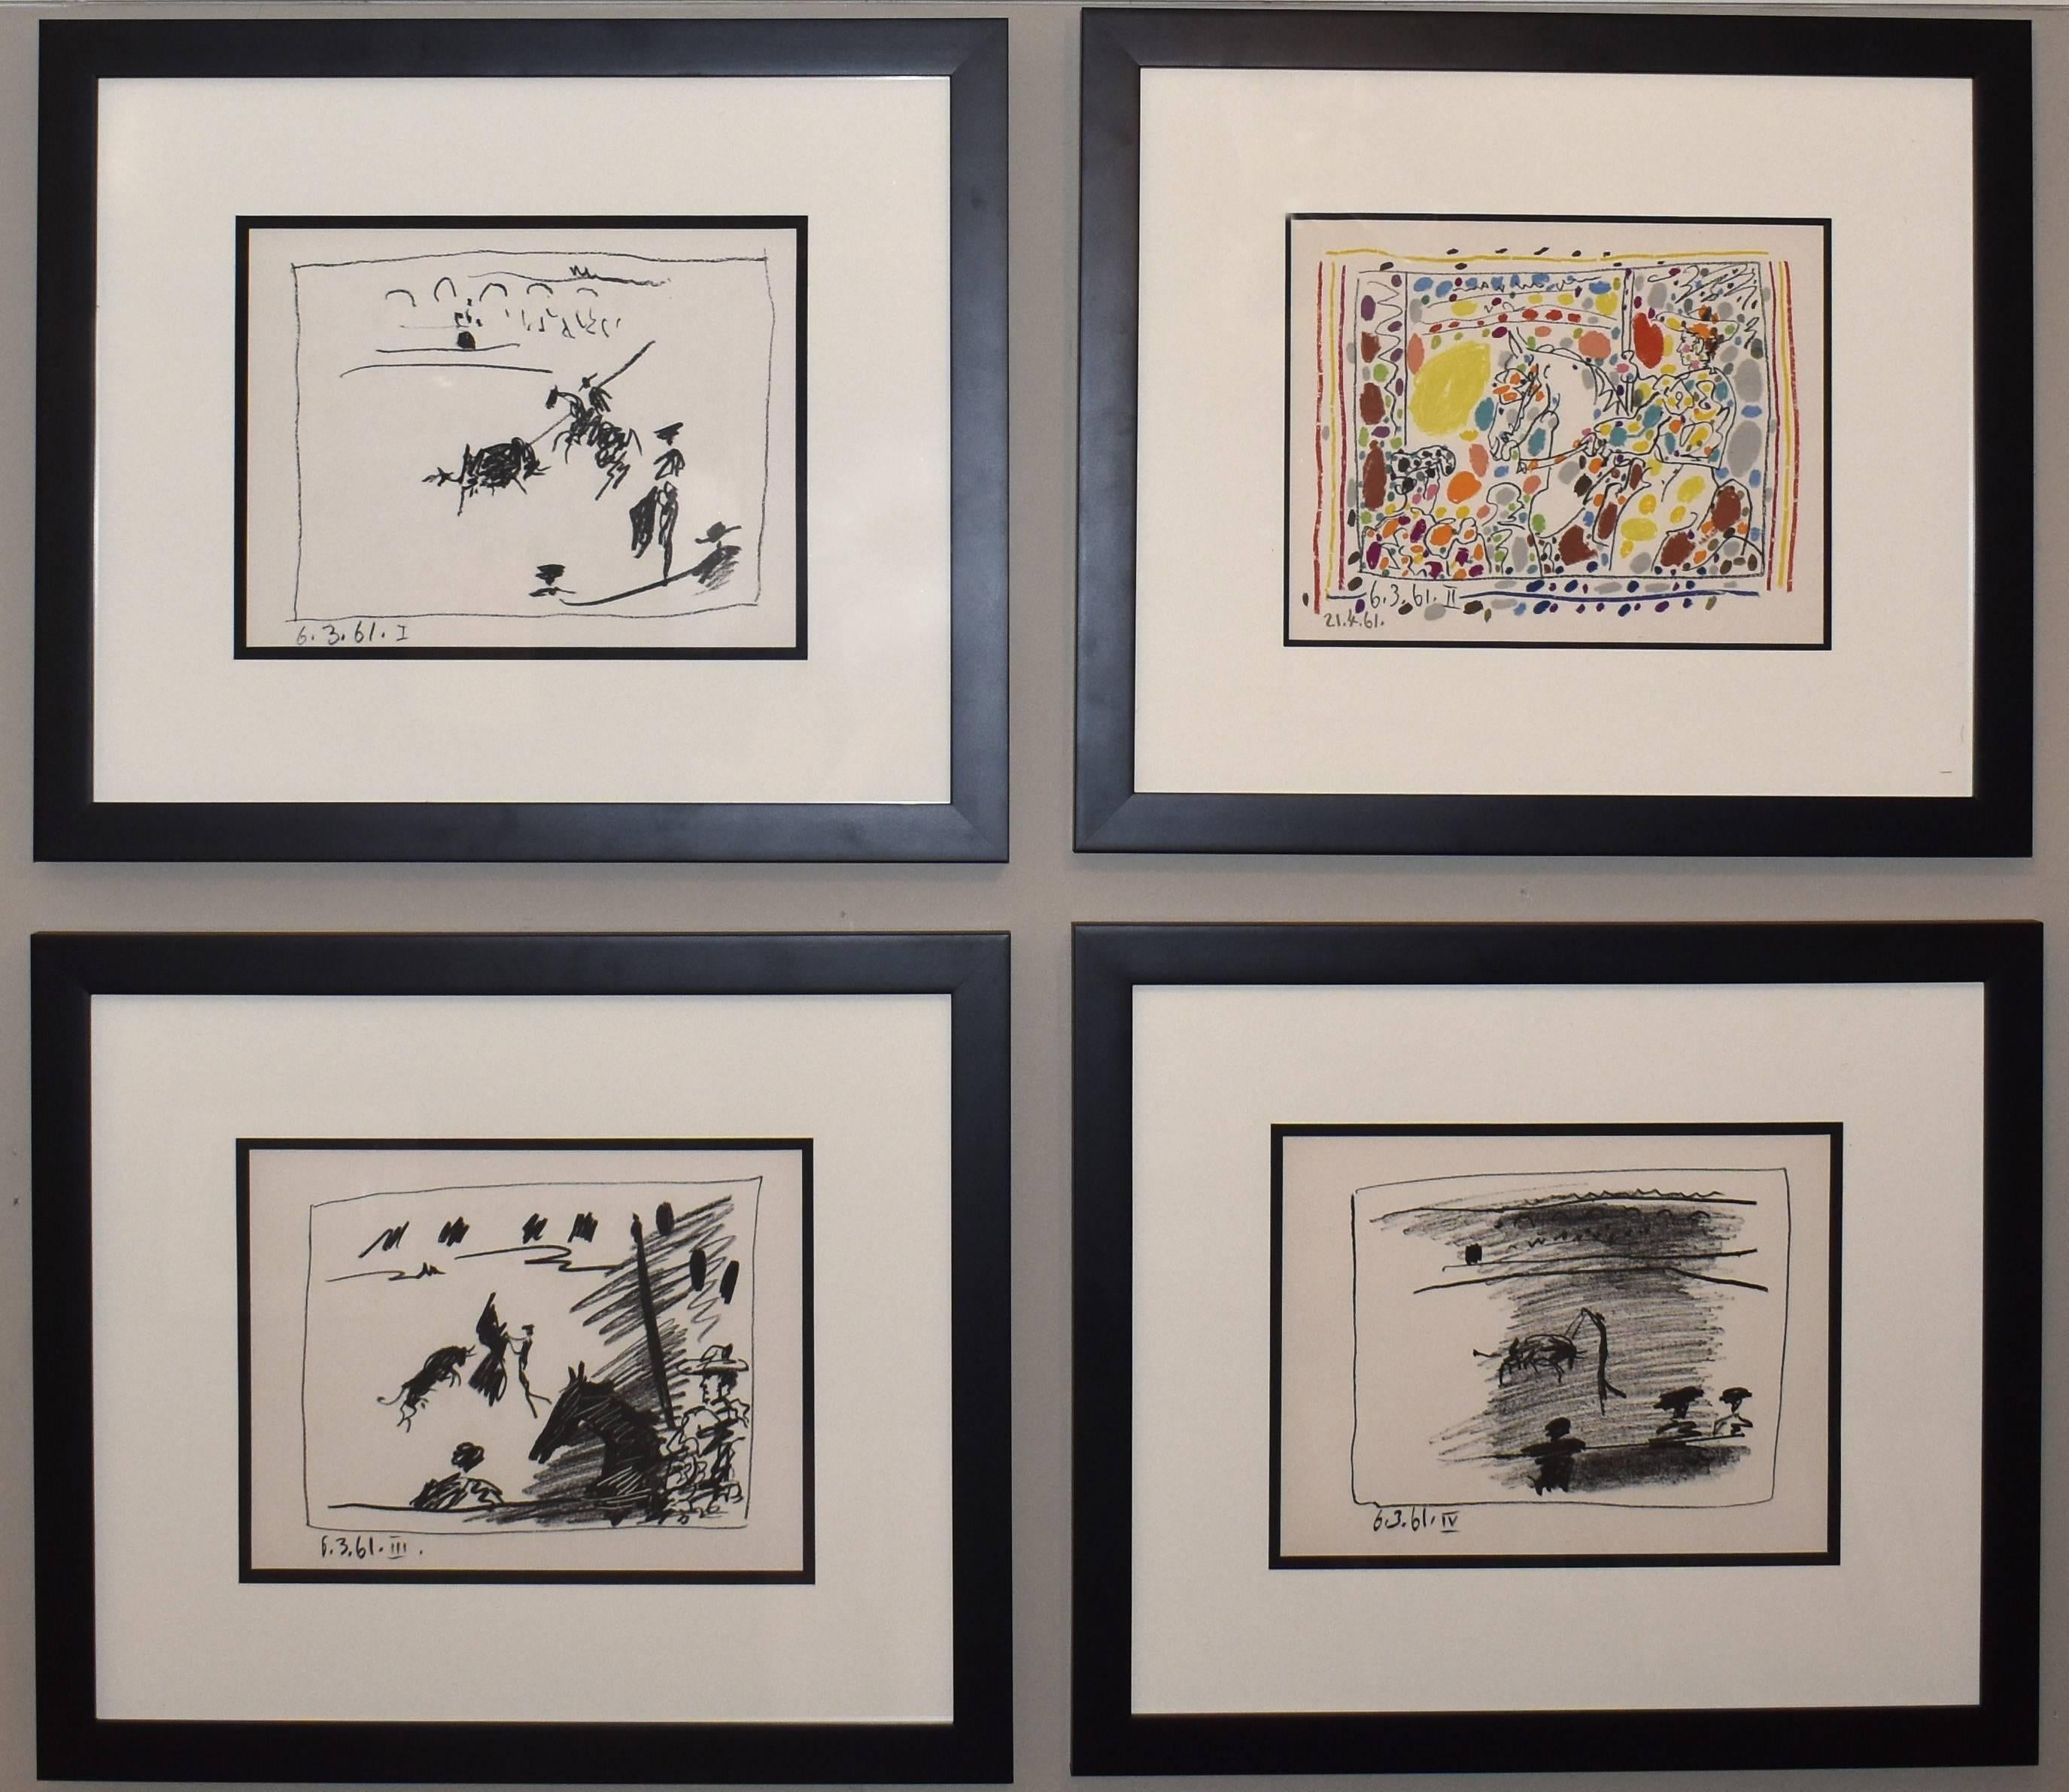 Animal Print Pablo Picasso - A Los Toros avec Picasso (Set of Four in Black Frames)